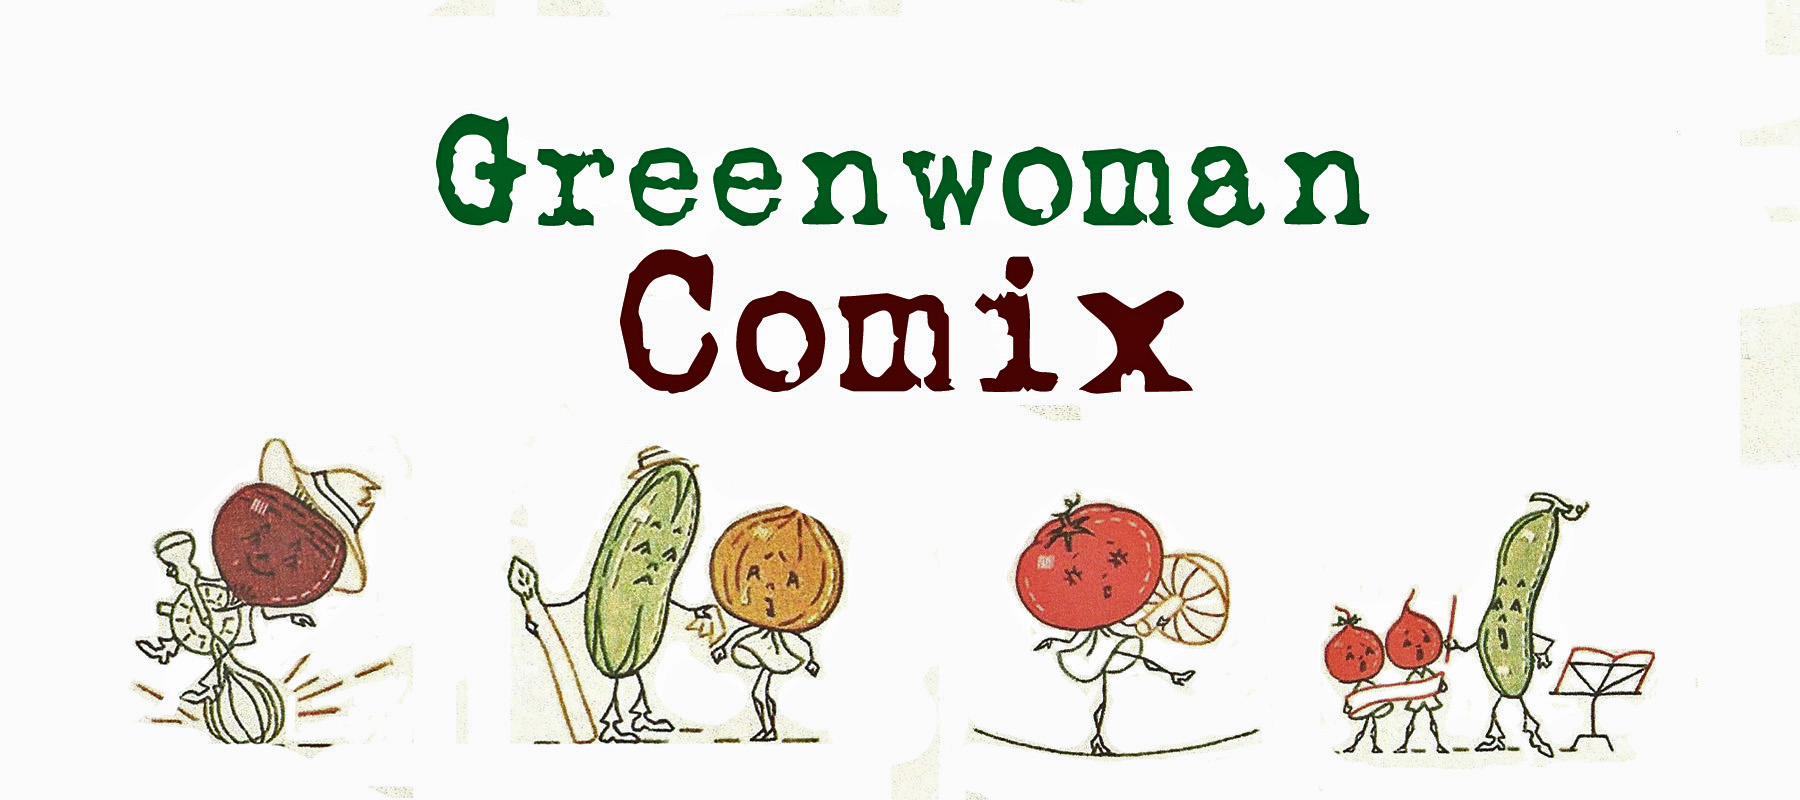 Greenwoman Comix Heading USR_edited-3